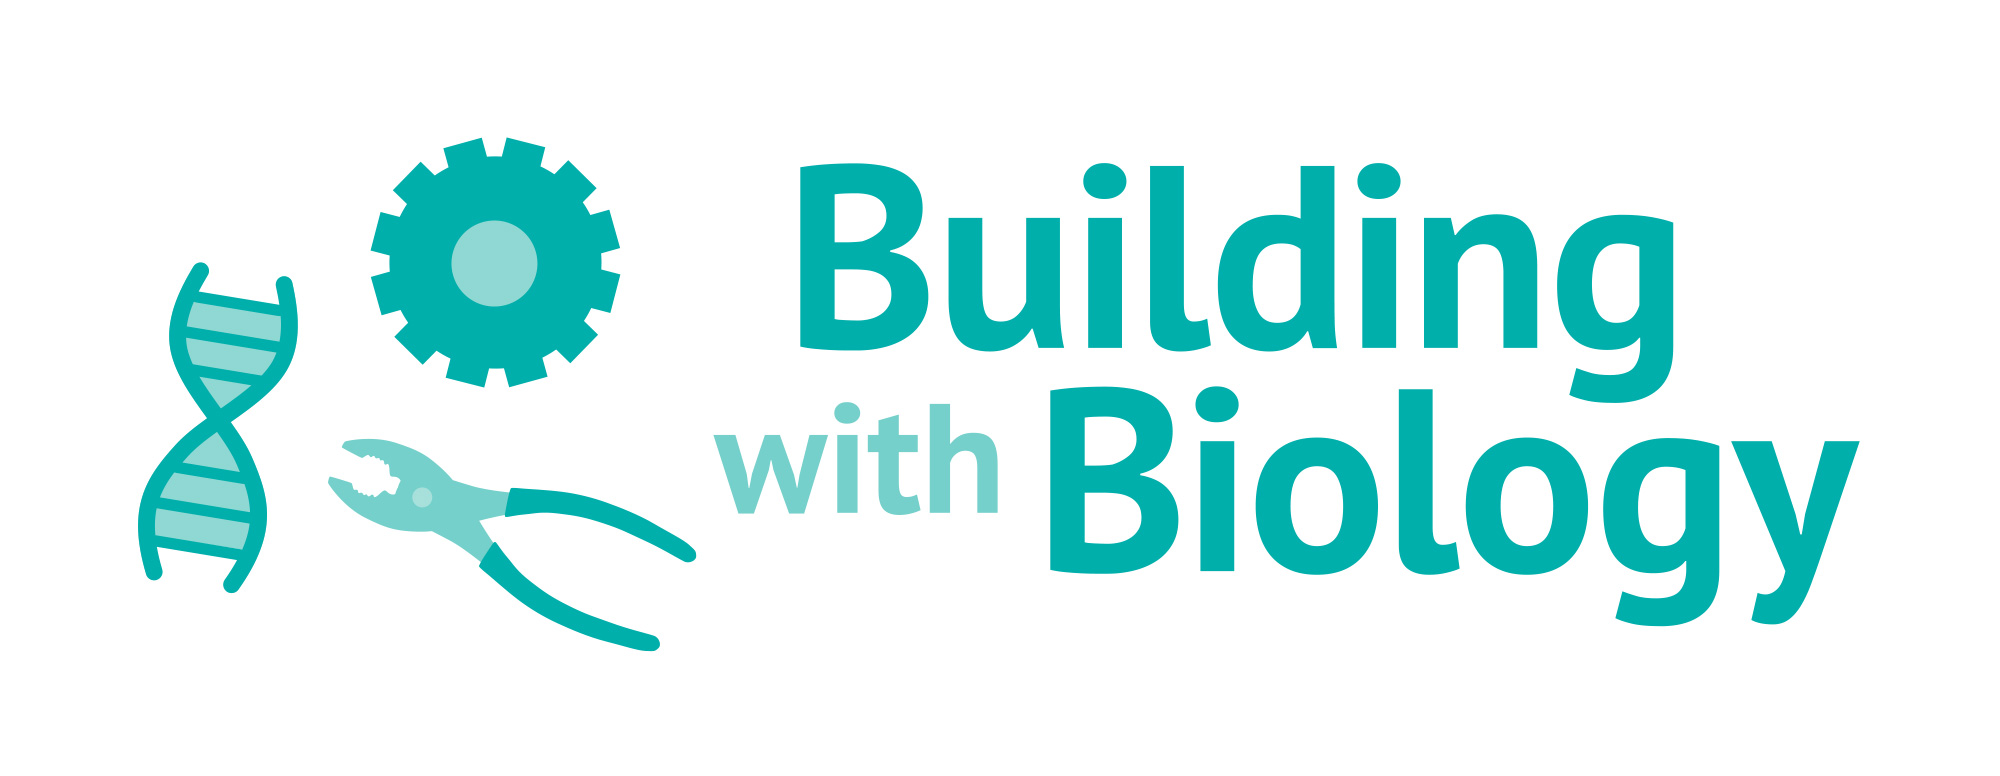 Biology Biotechnology Chemistry, biology, logo png | PNGEgg